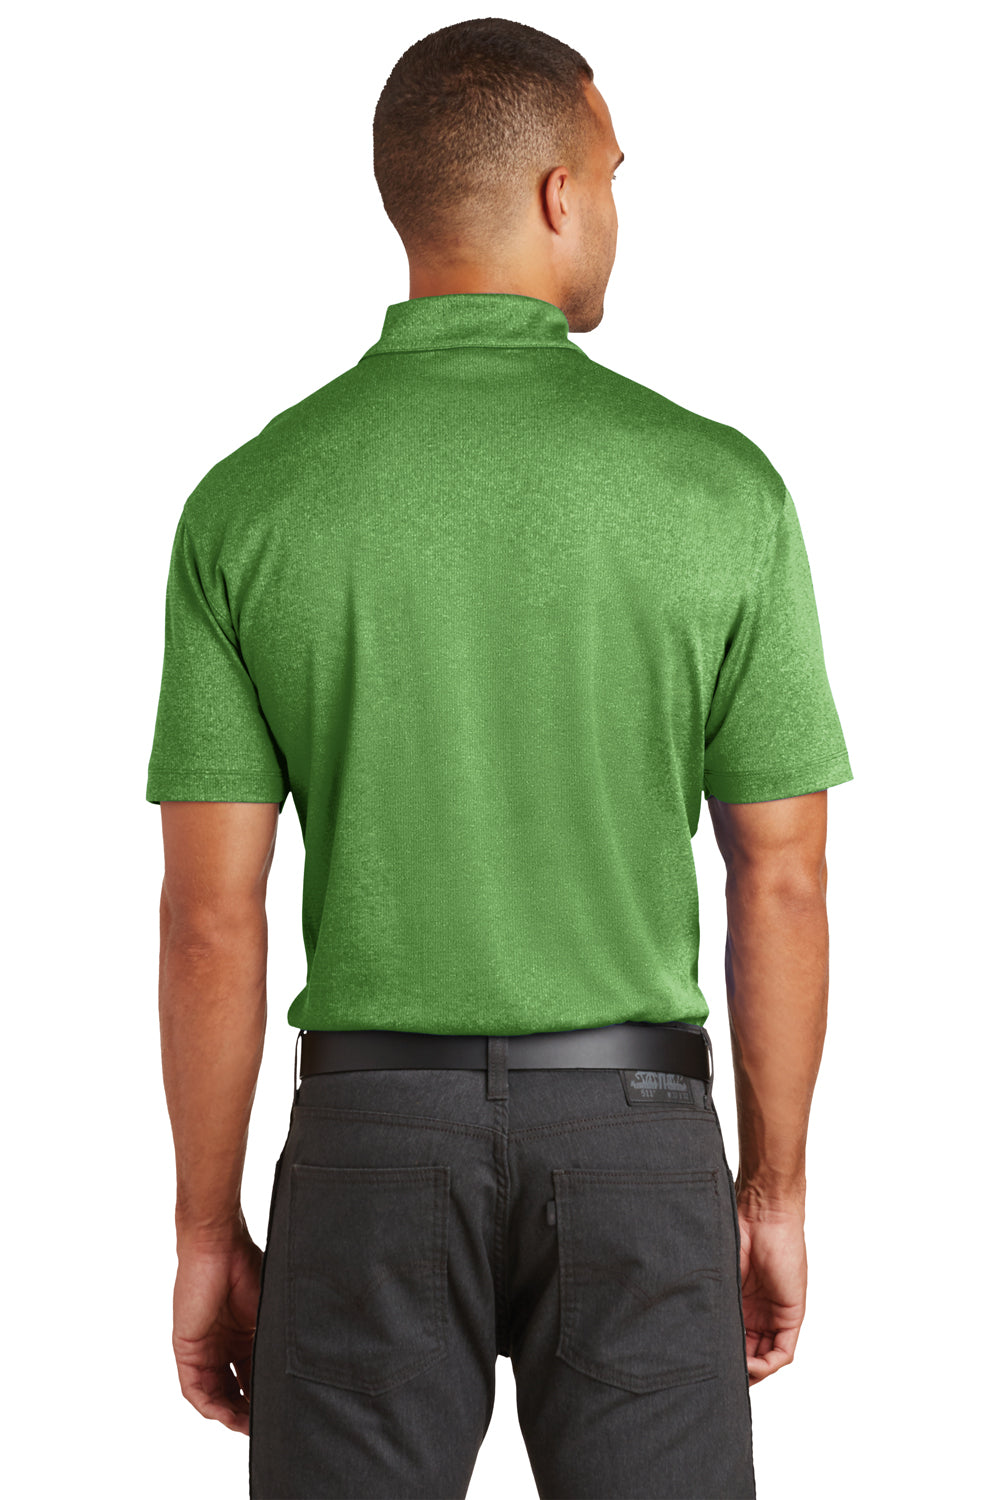 Port Authority K576 Mens Trace Moisture Wicking Short Sleeve Polo Shirt Heather Vine Green Back